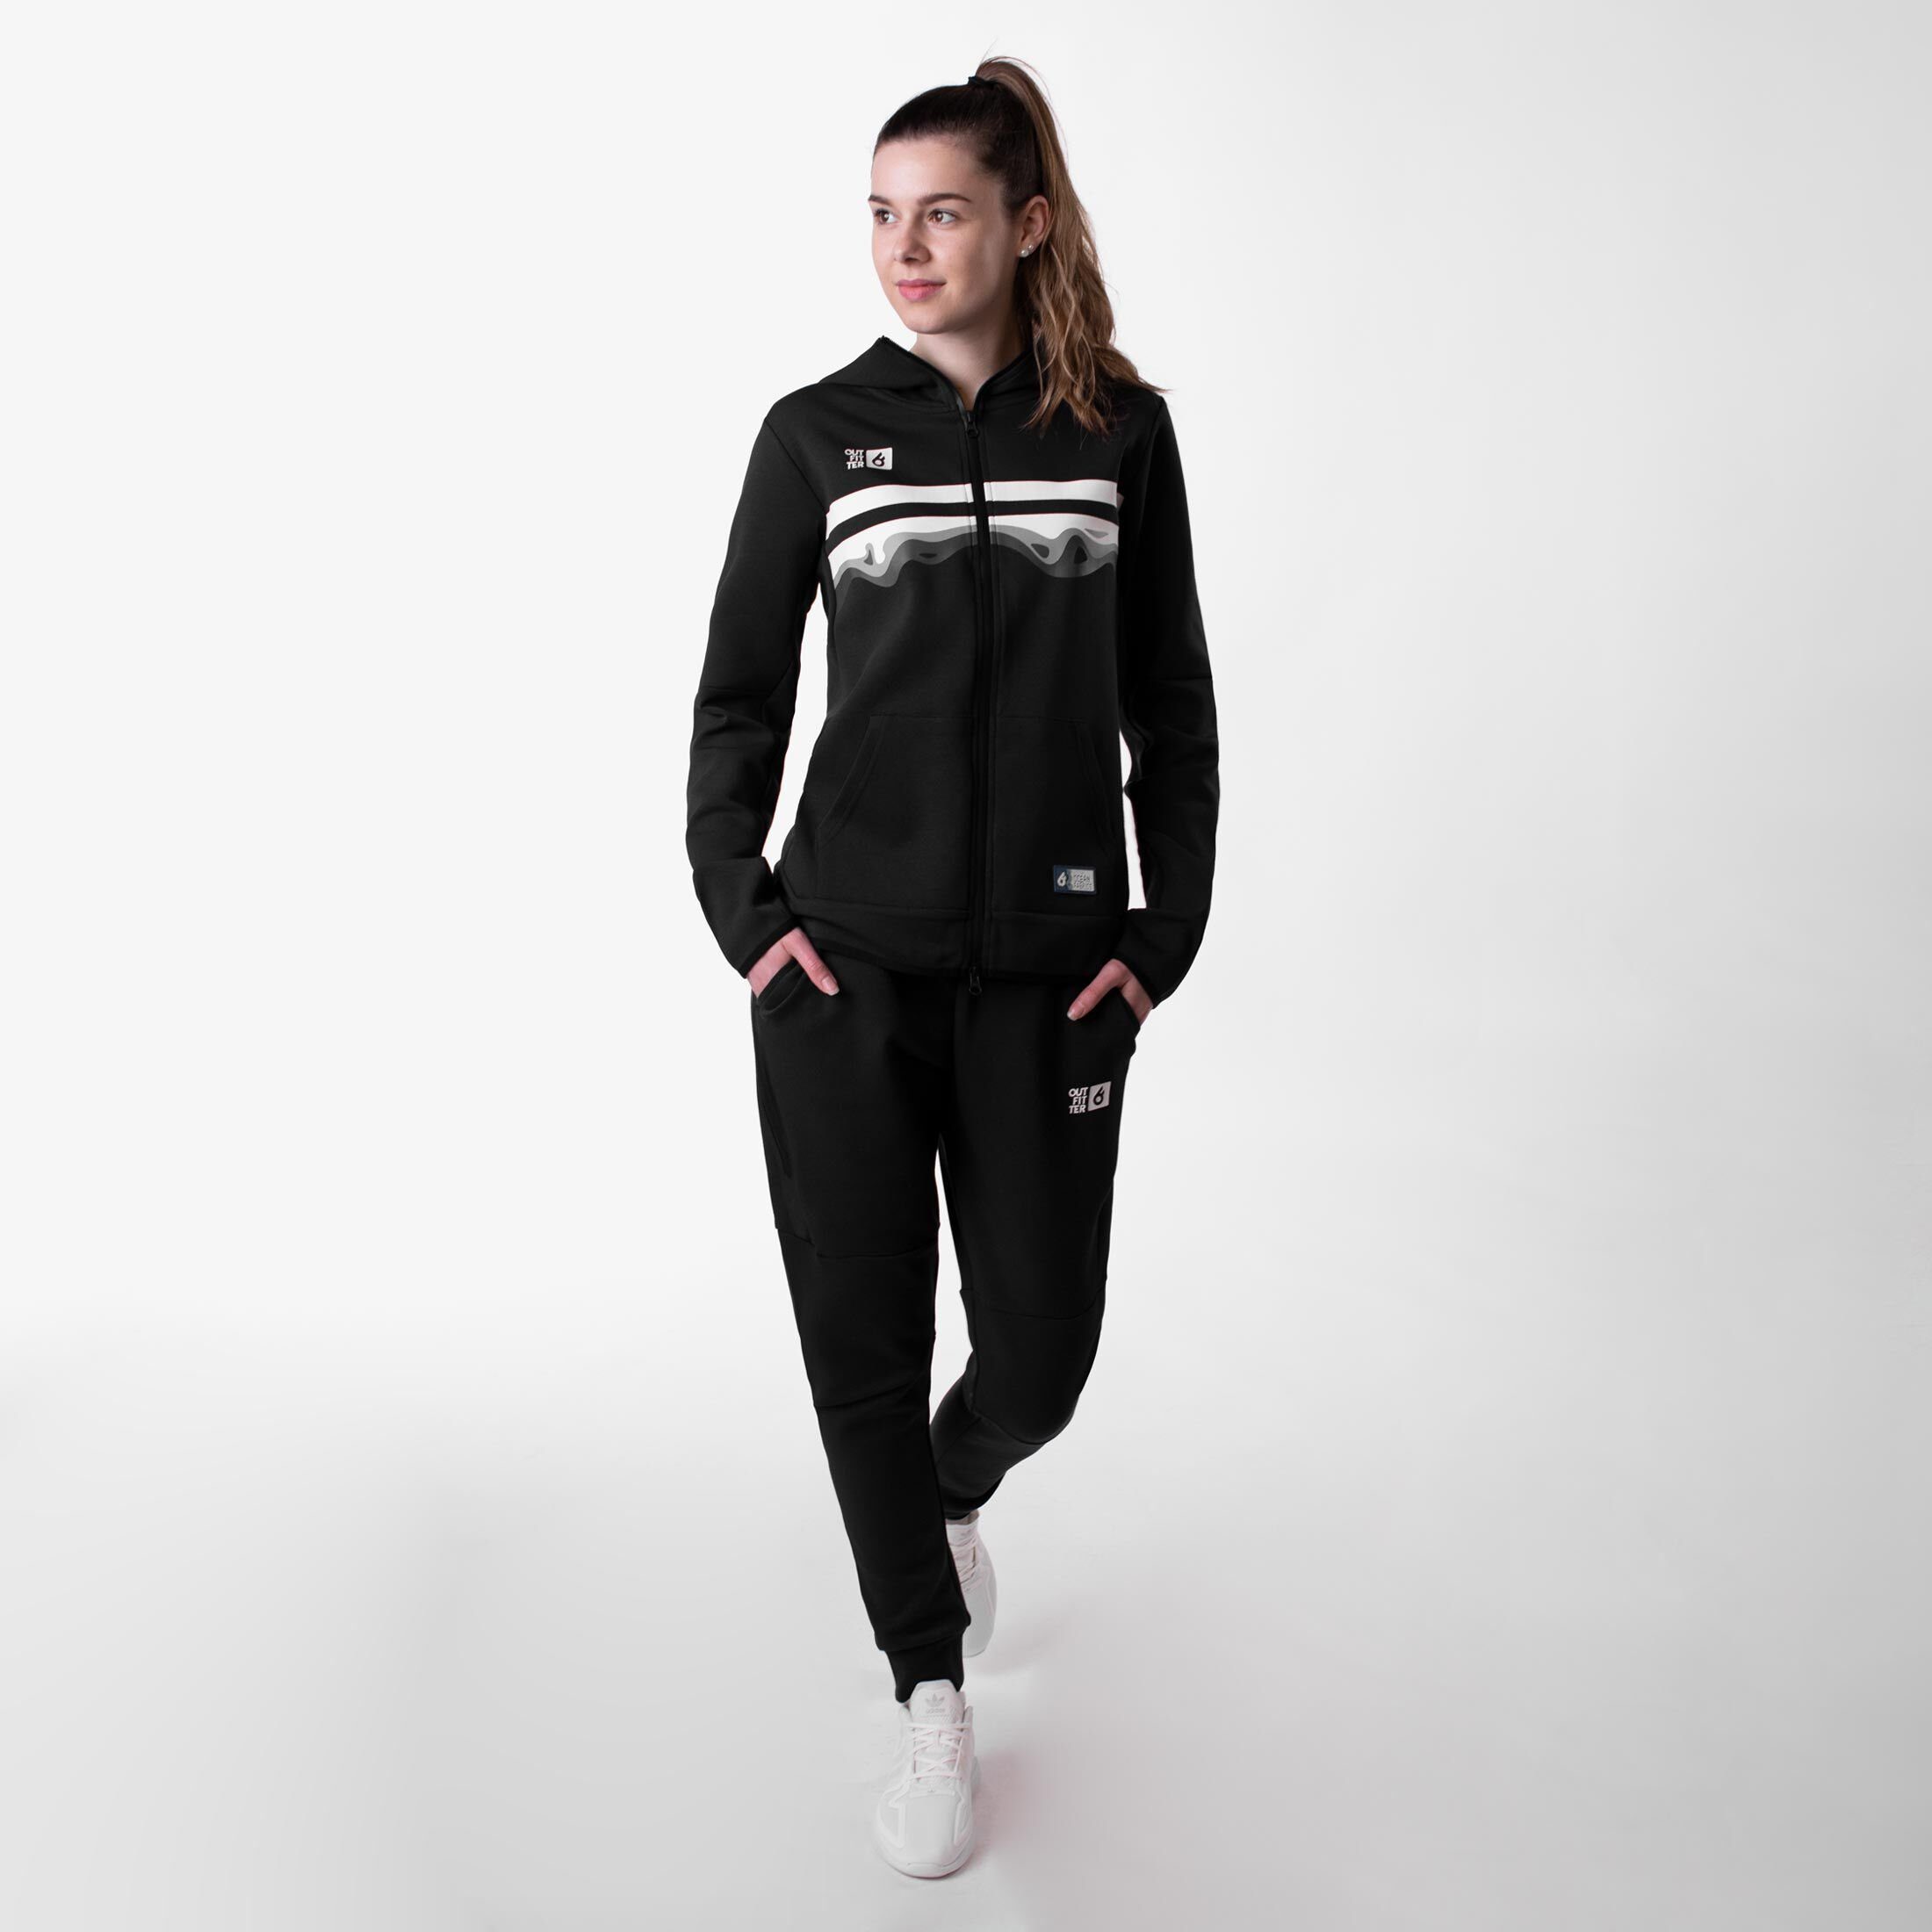 Damen Jogginganzug schwarz Ocean Outfitter Trainingsanzug Fabrics